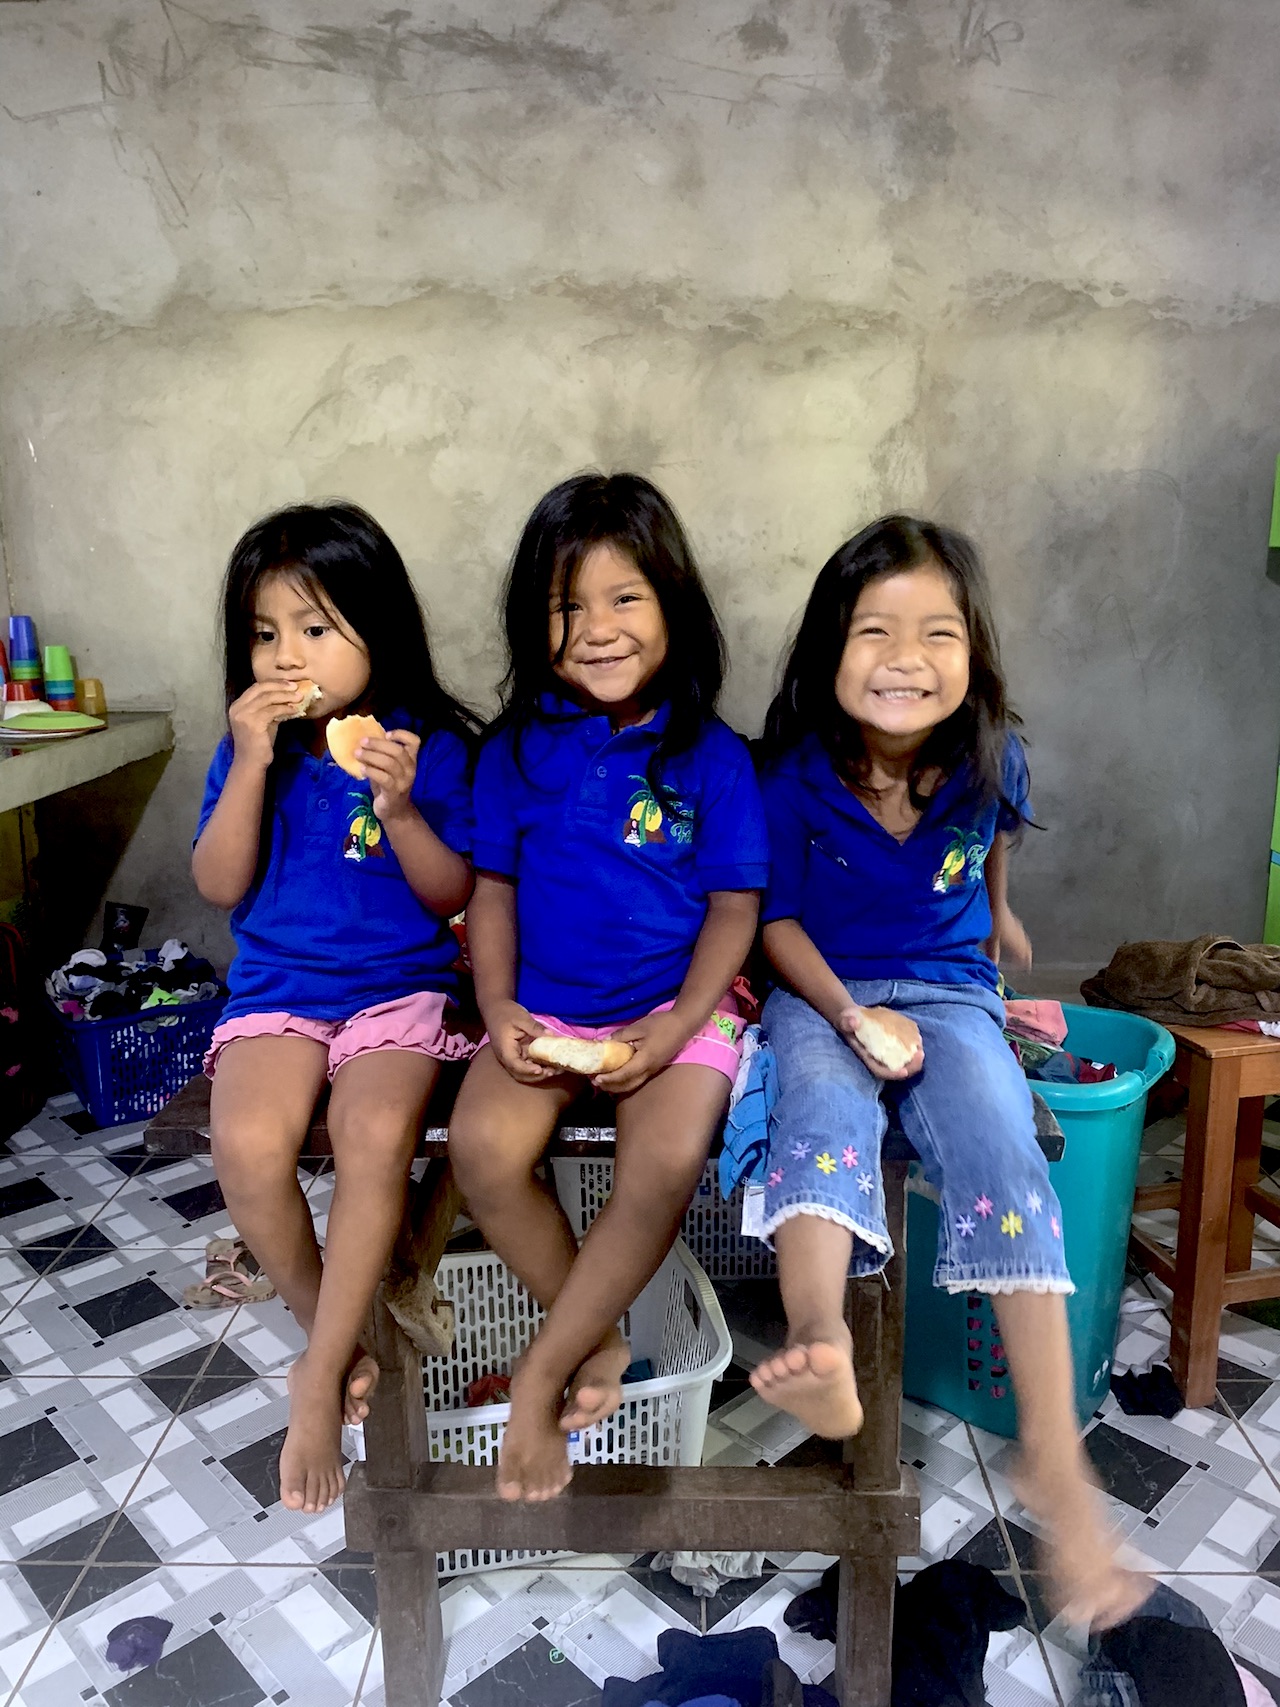 Pic of three little girls from Familia Feliz